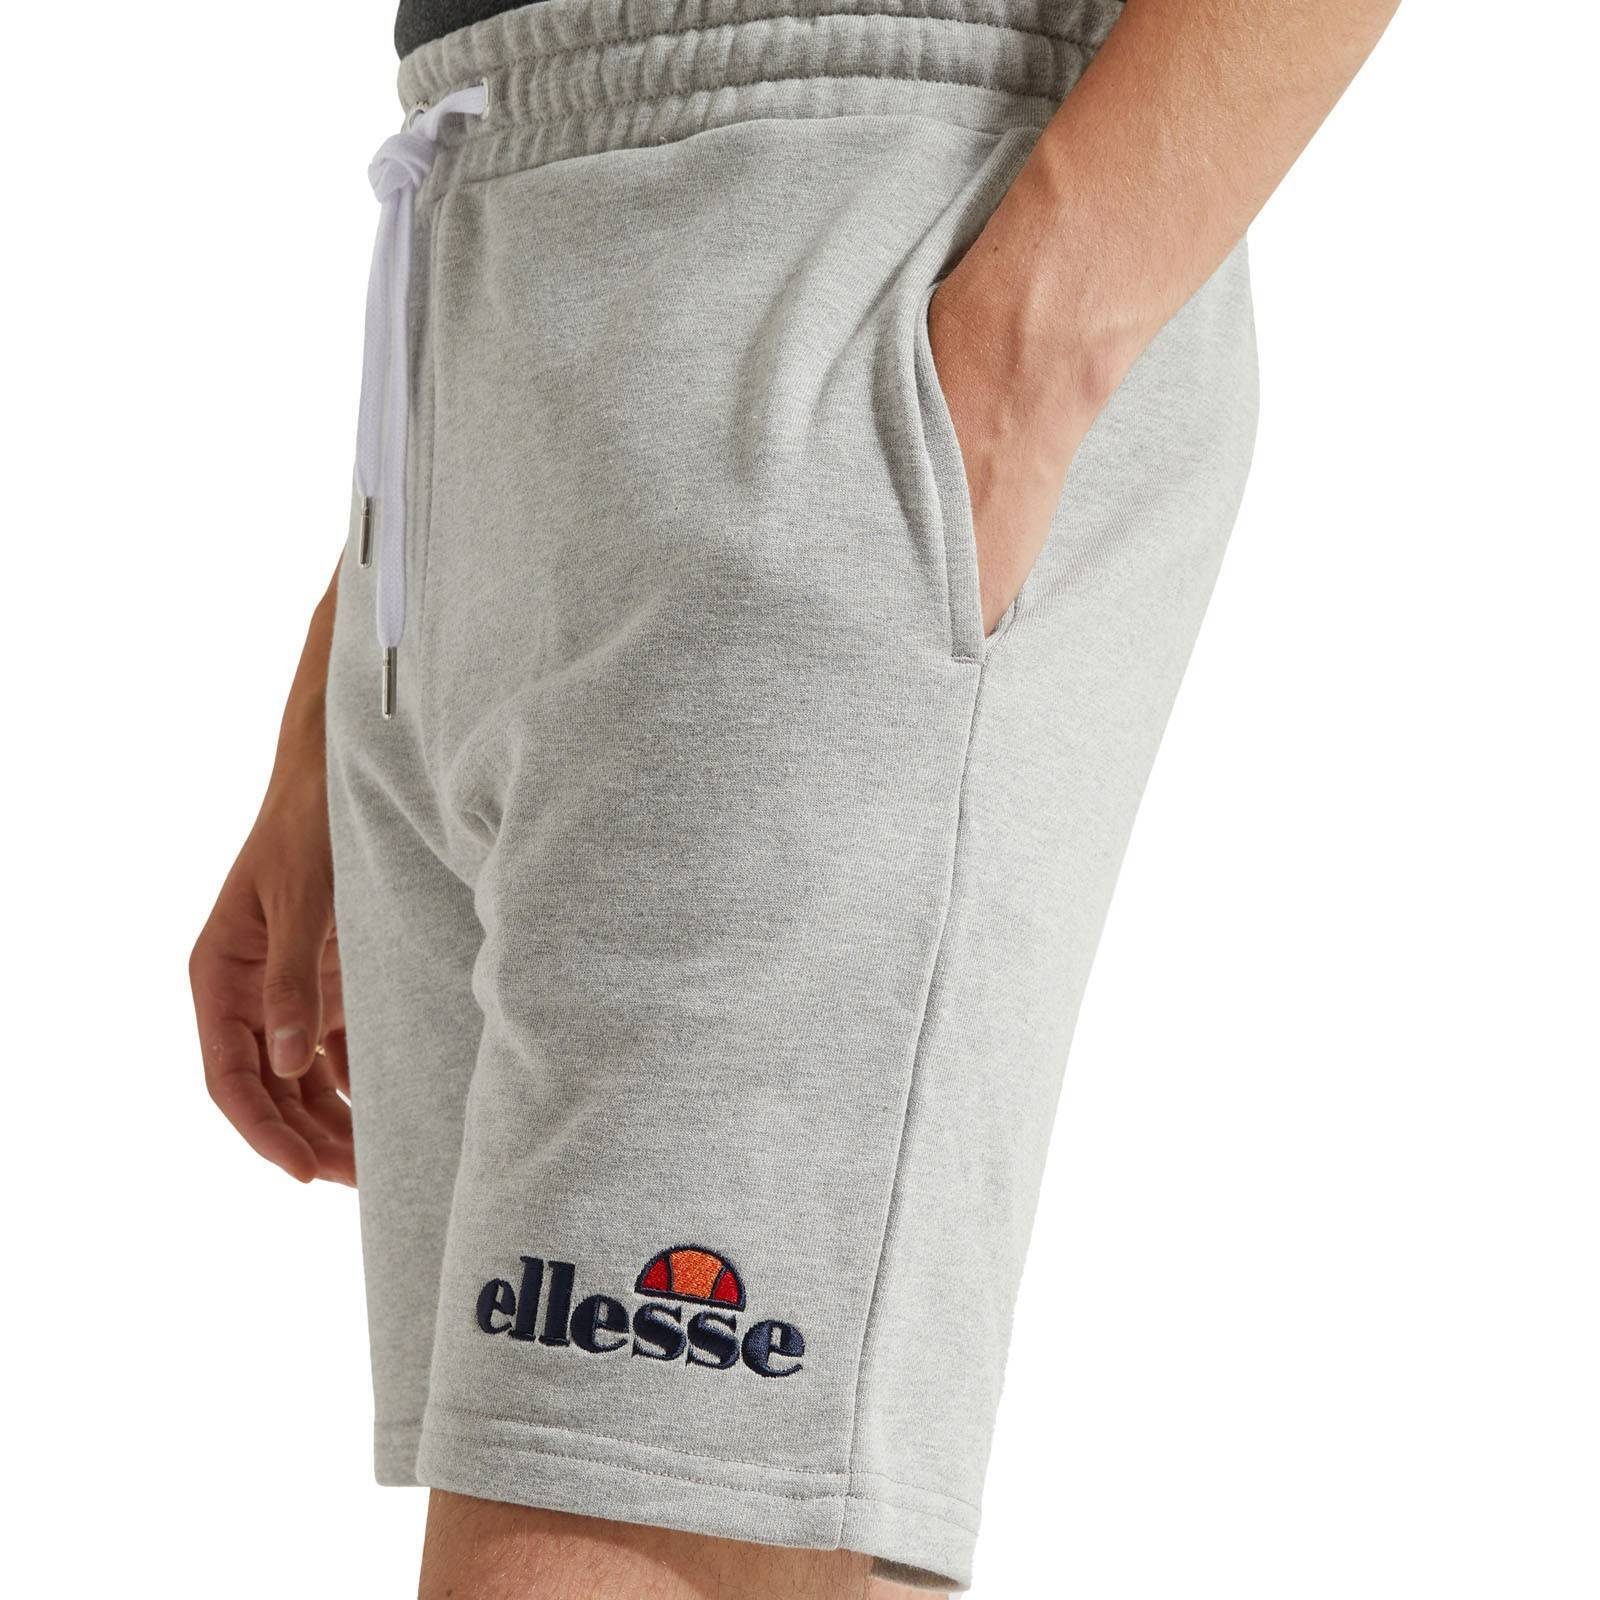 Ellesse Sweatshorts Herren Shorts SILVAN - Jog-Pants Loungewear, Grau